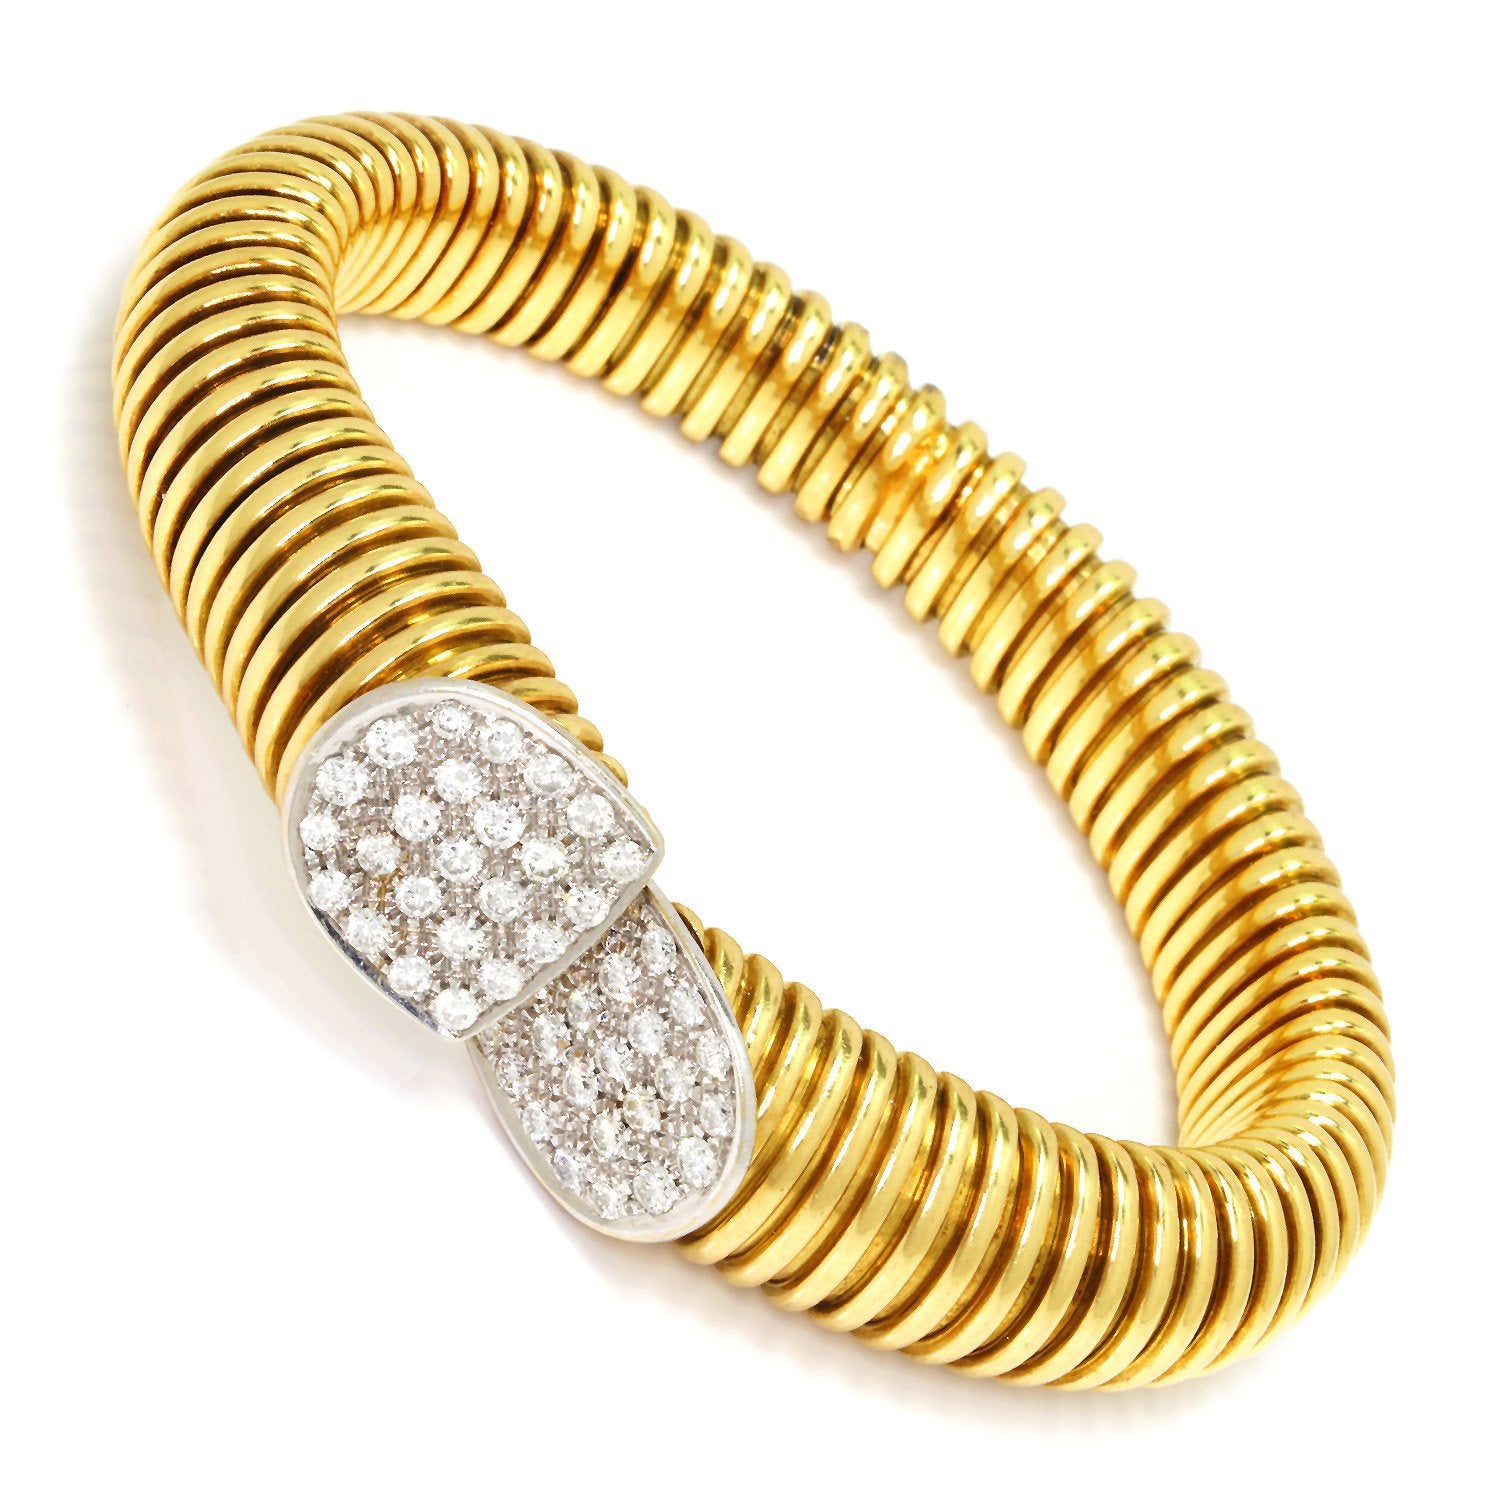 Buy Solid Gold Cuff Bracelet 18k Gold or 14k Gold Online in India  Etsy